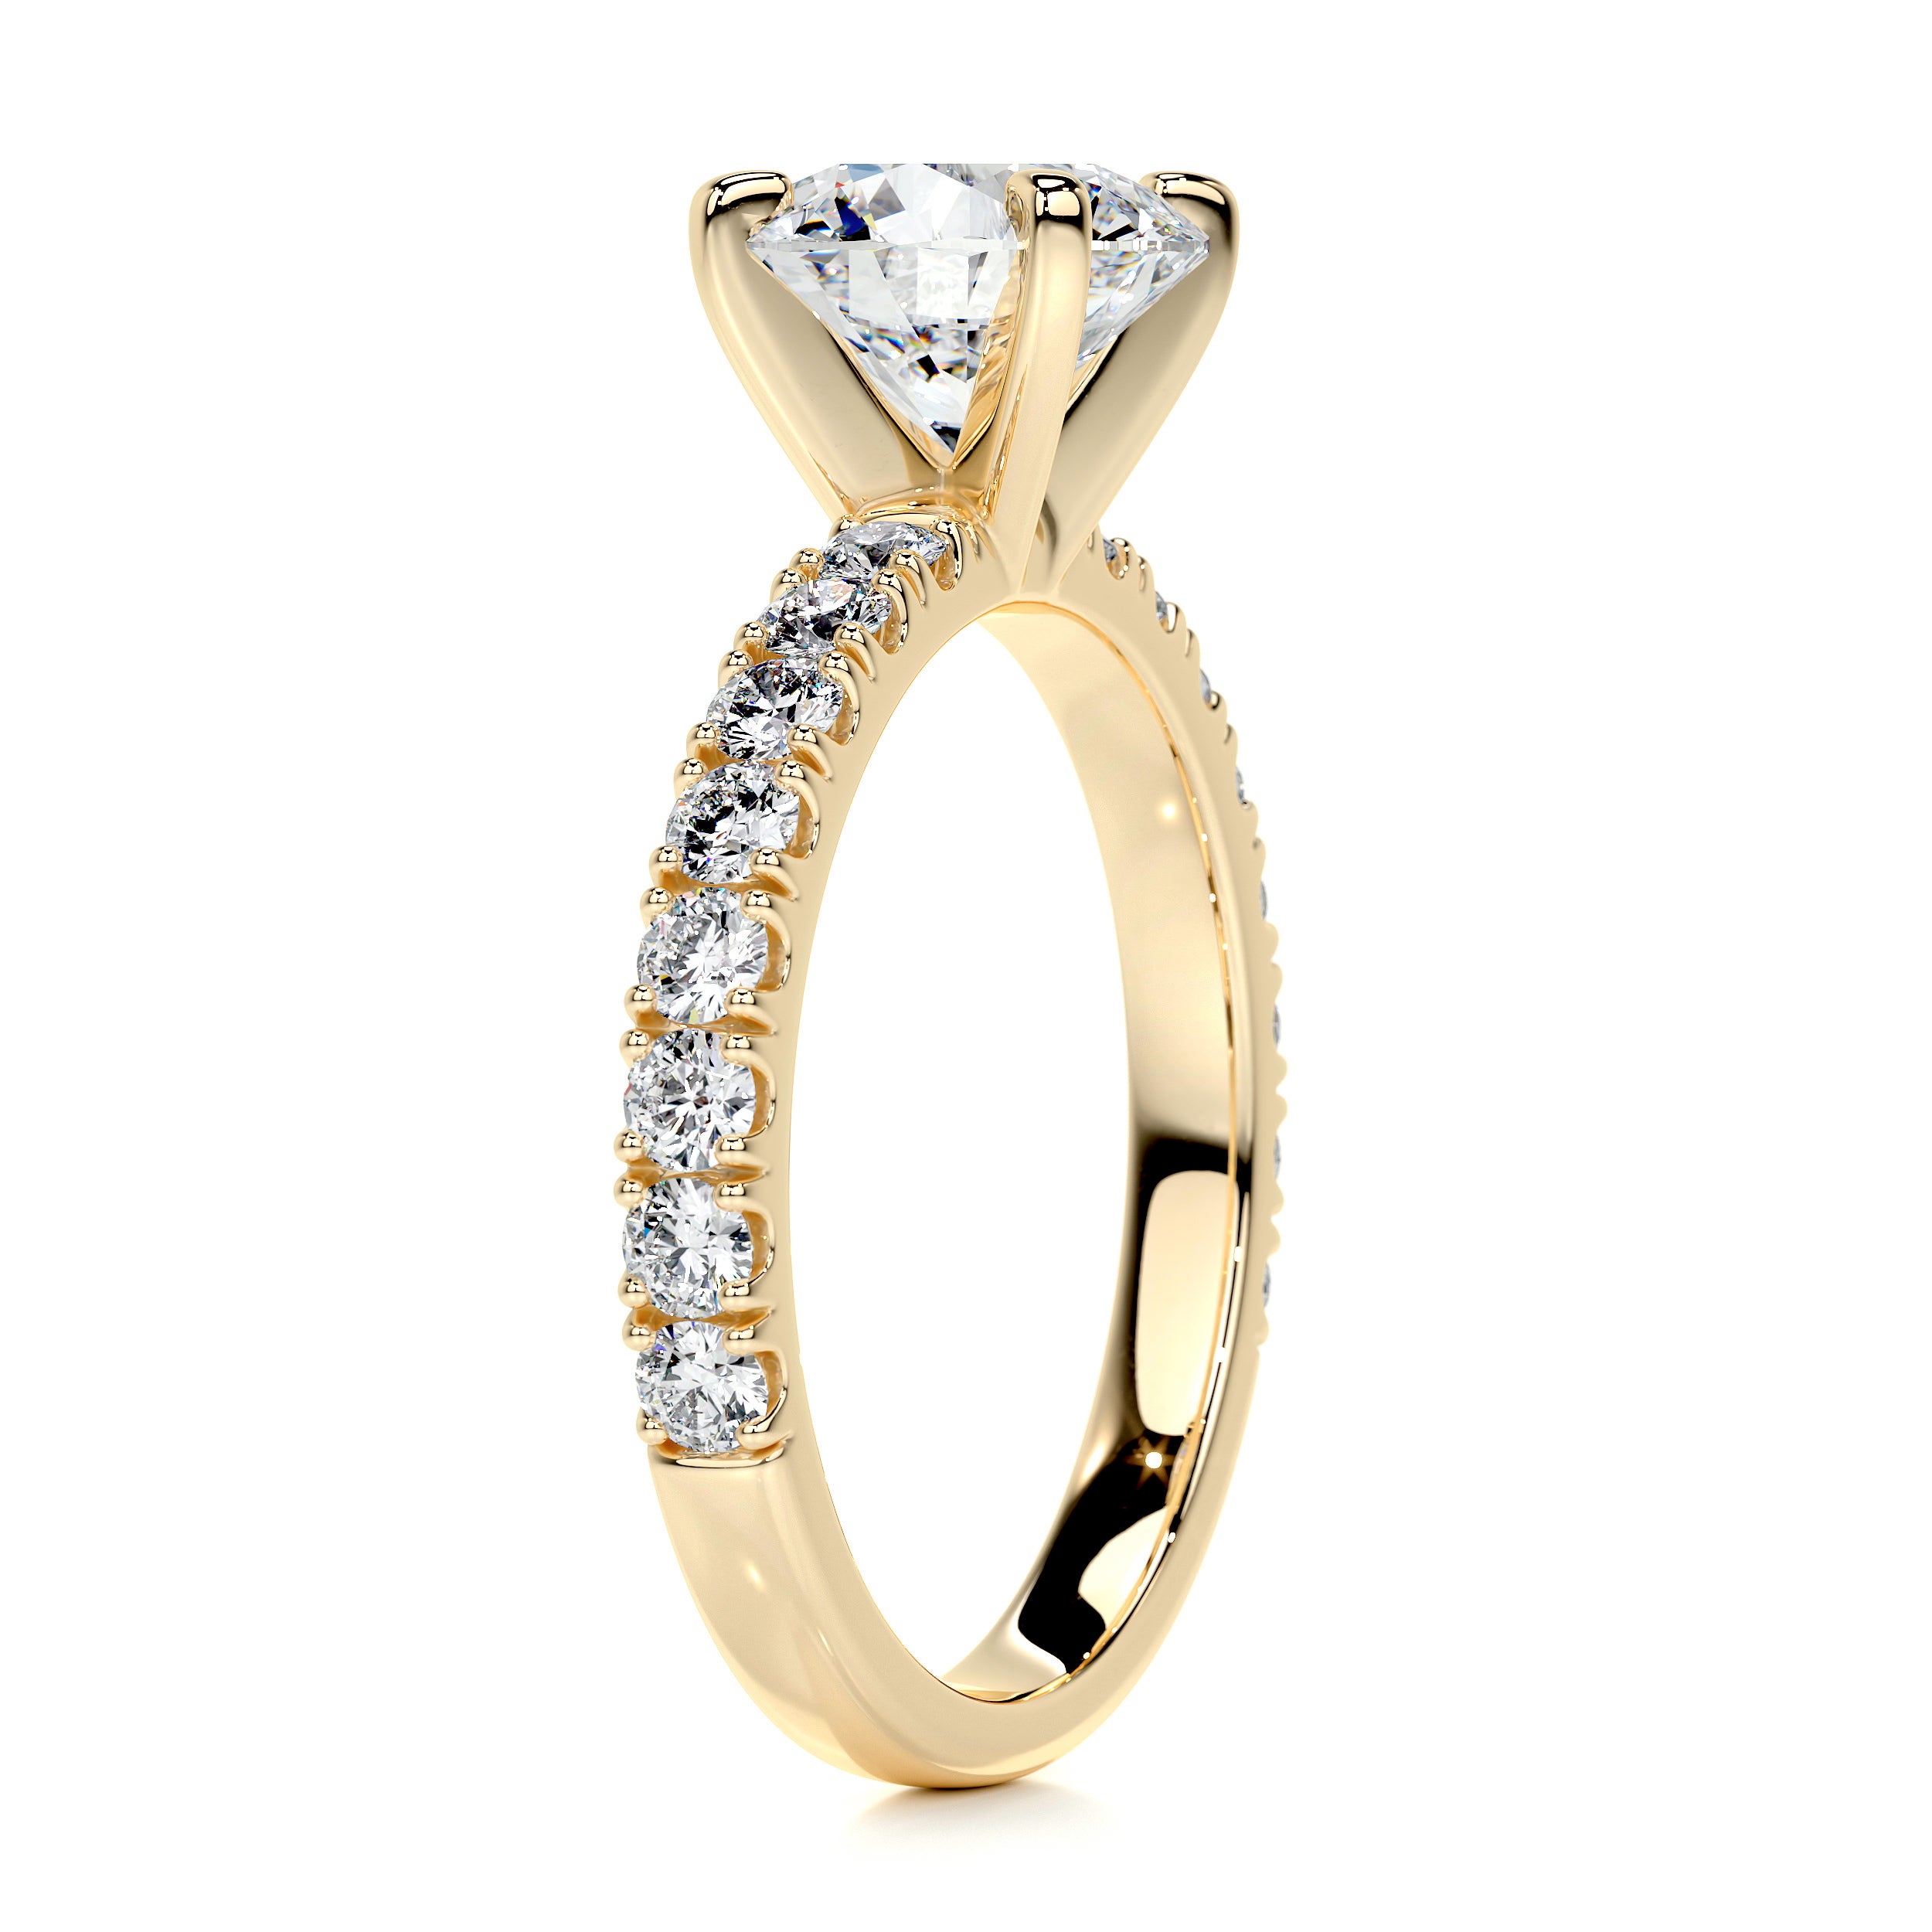 Alison Diamond Engagement Ring   (2 Carat) -18K Yellow Gold